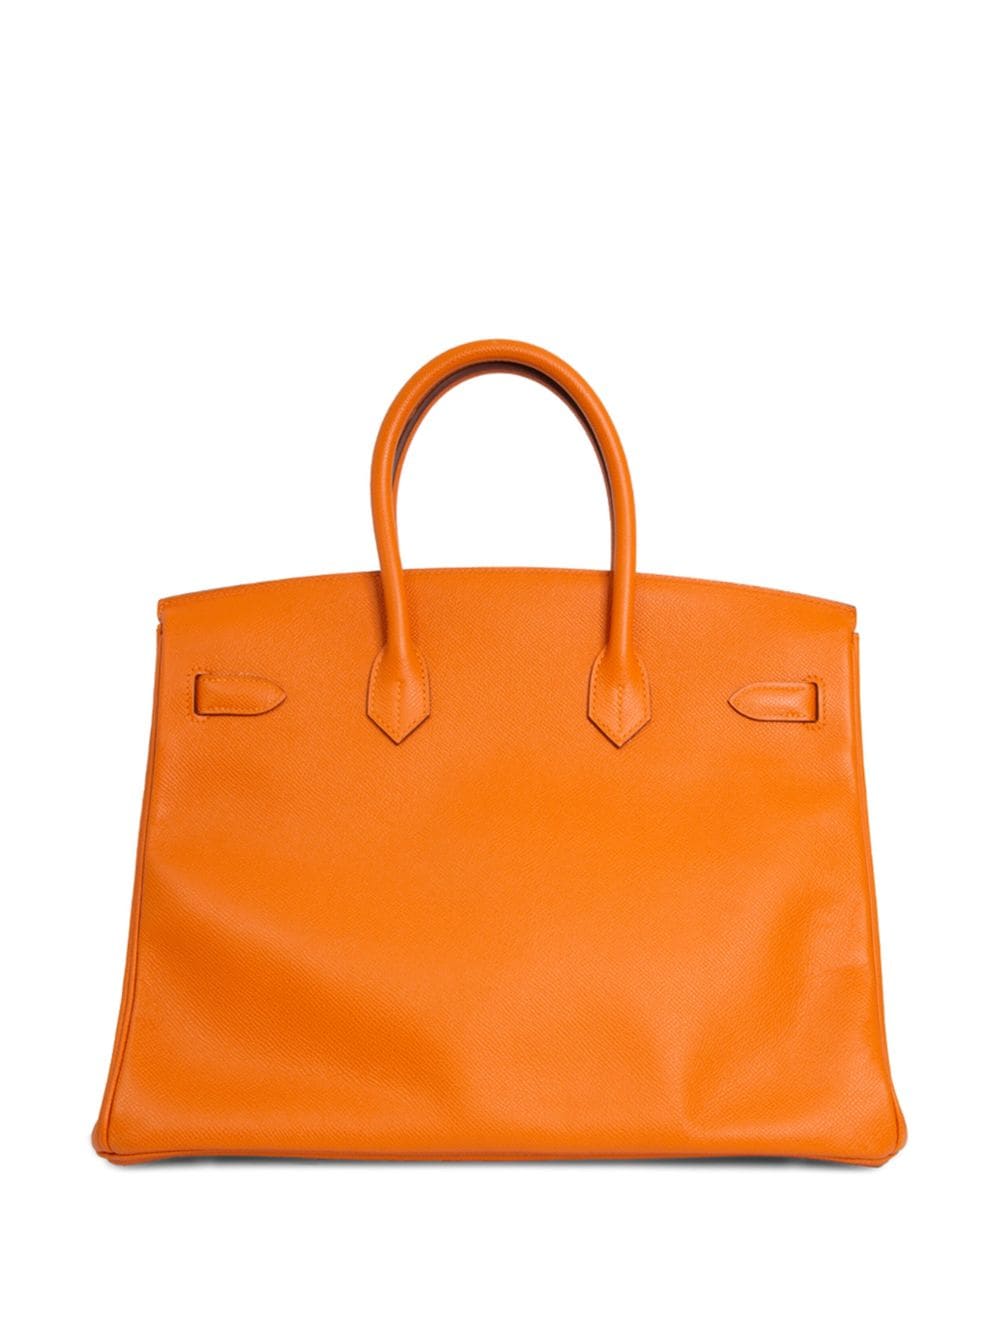 Hermès 2013 pre-owned Birkin 35 handbag - Oranje